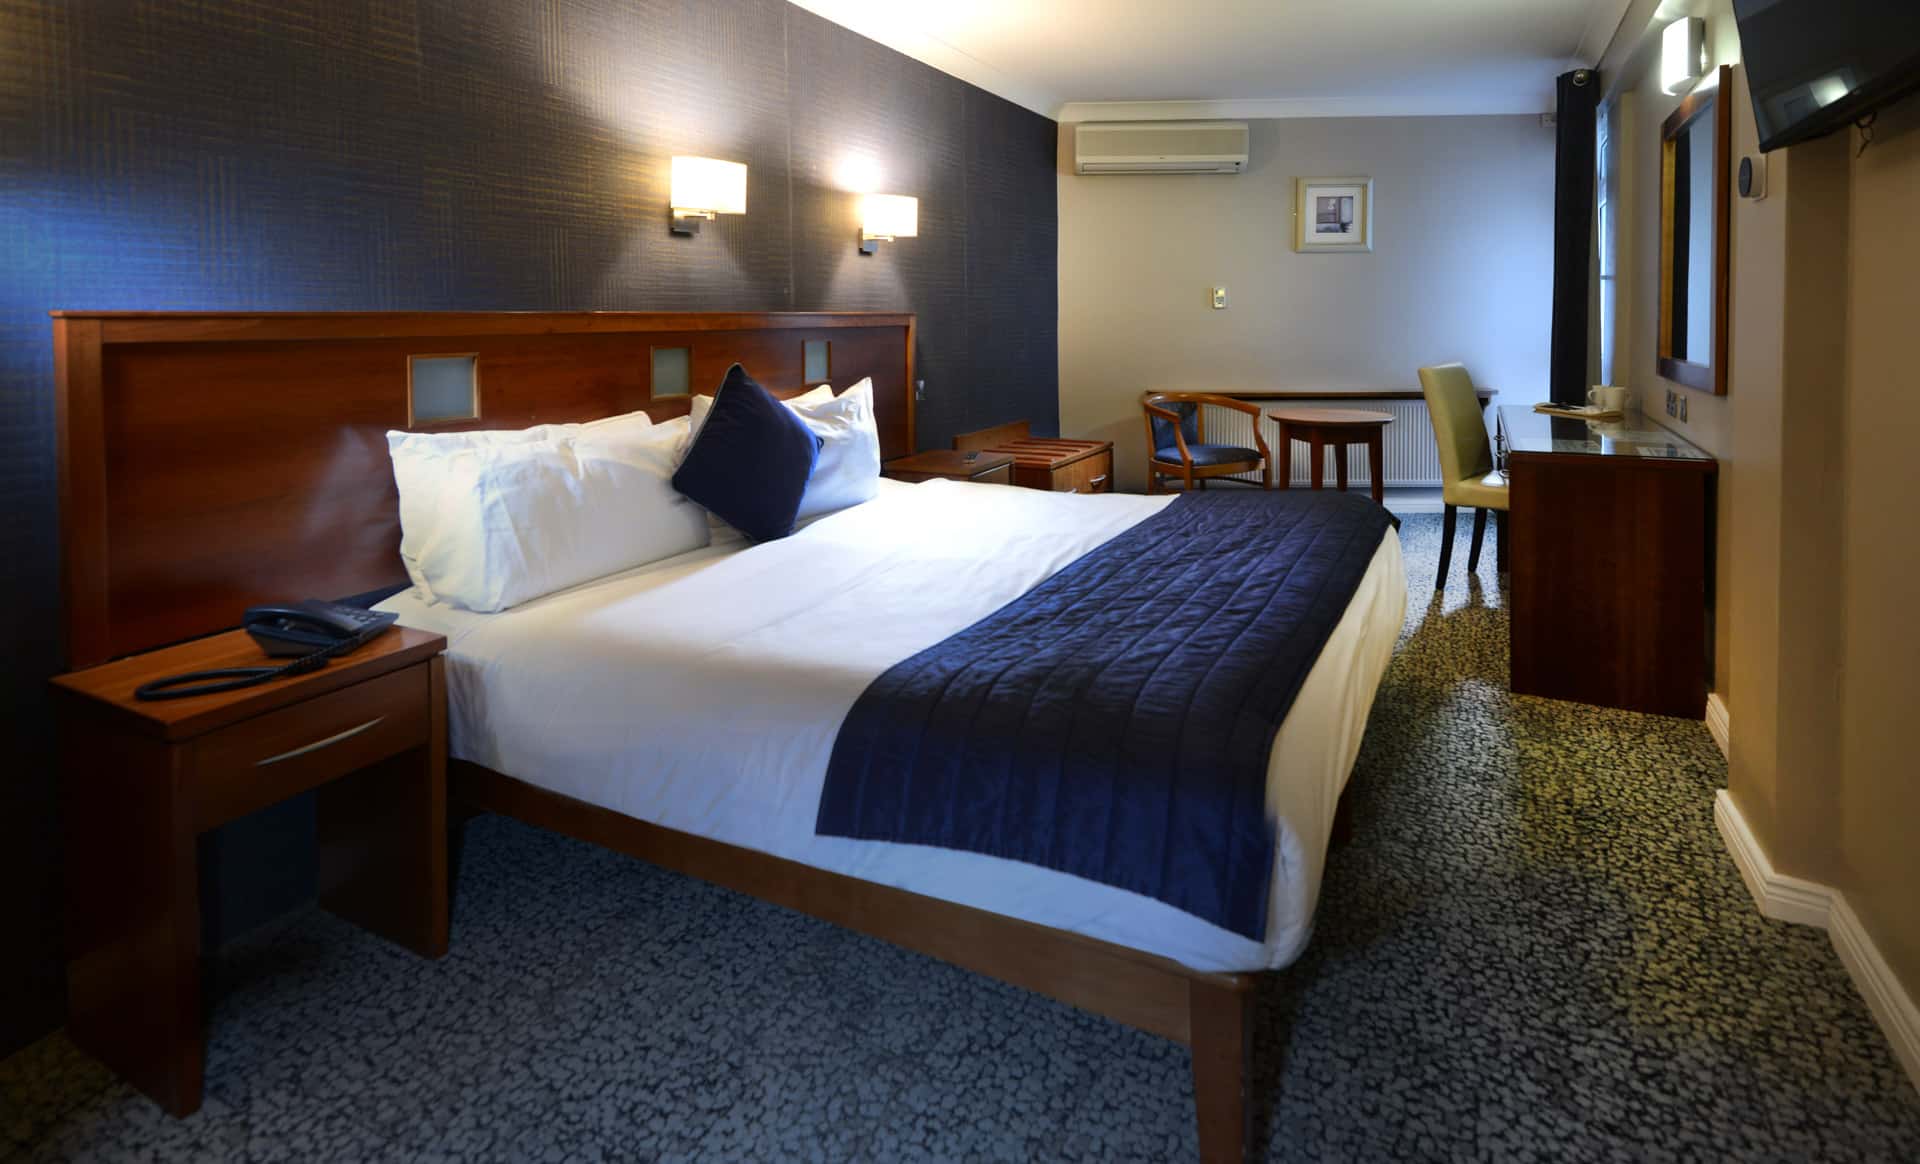 Bedroom in Imperial Hotel Galway